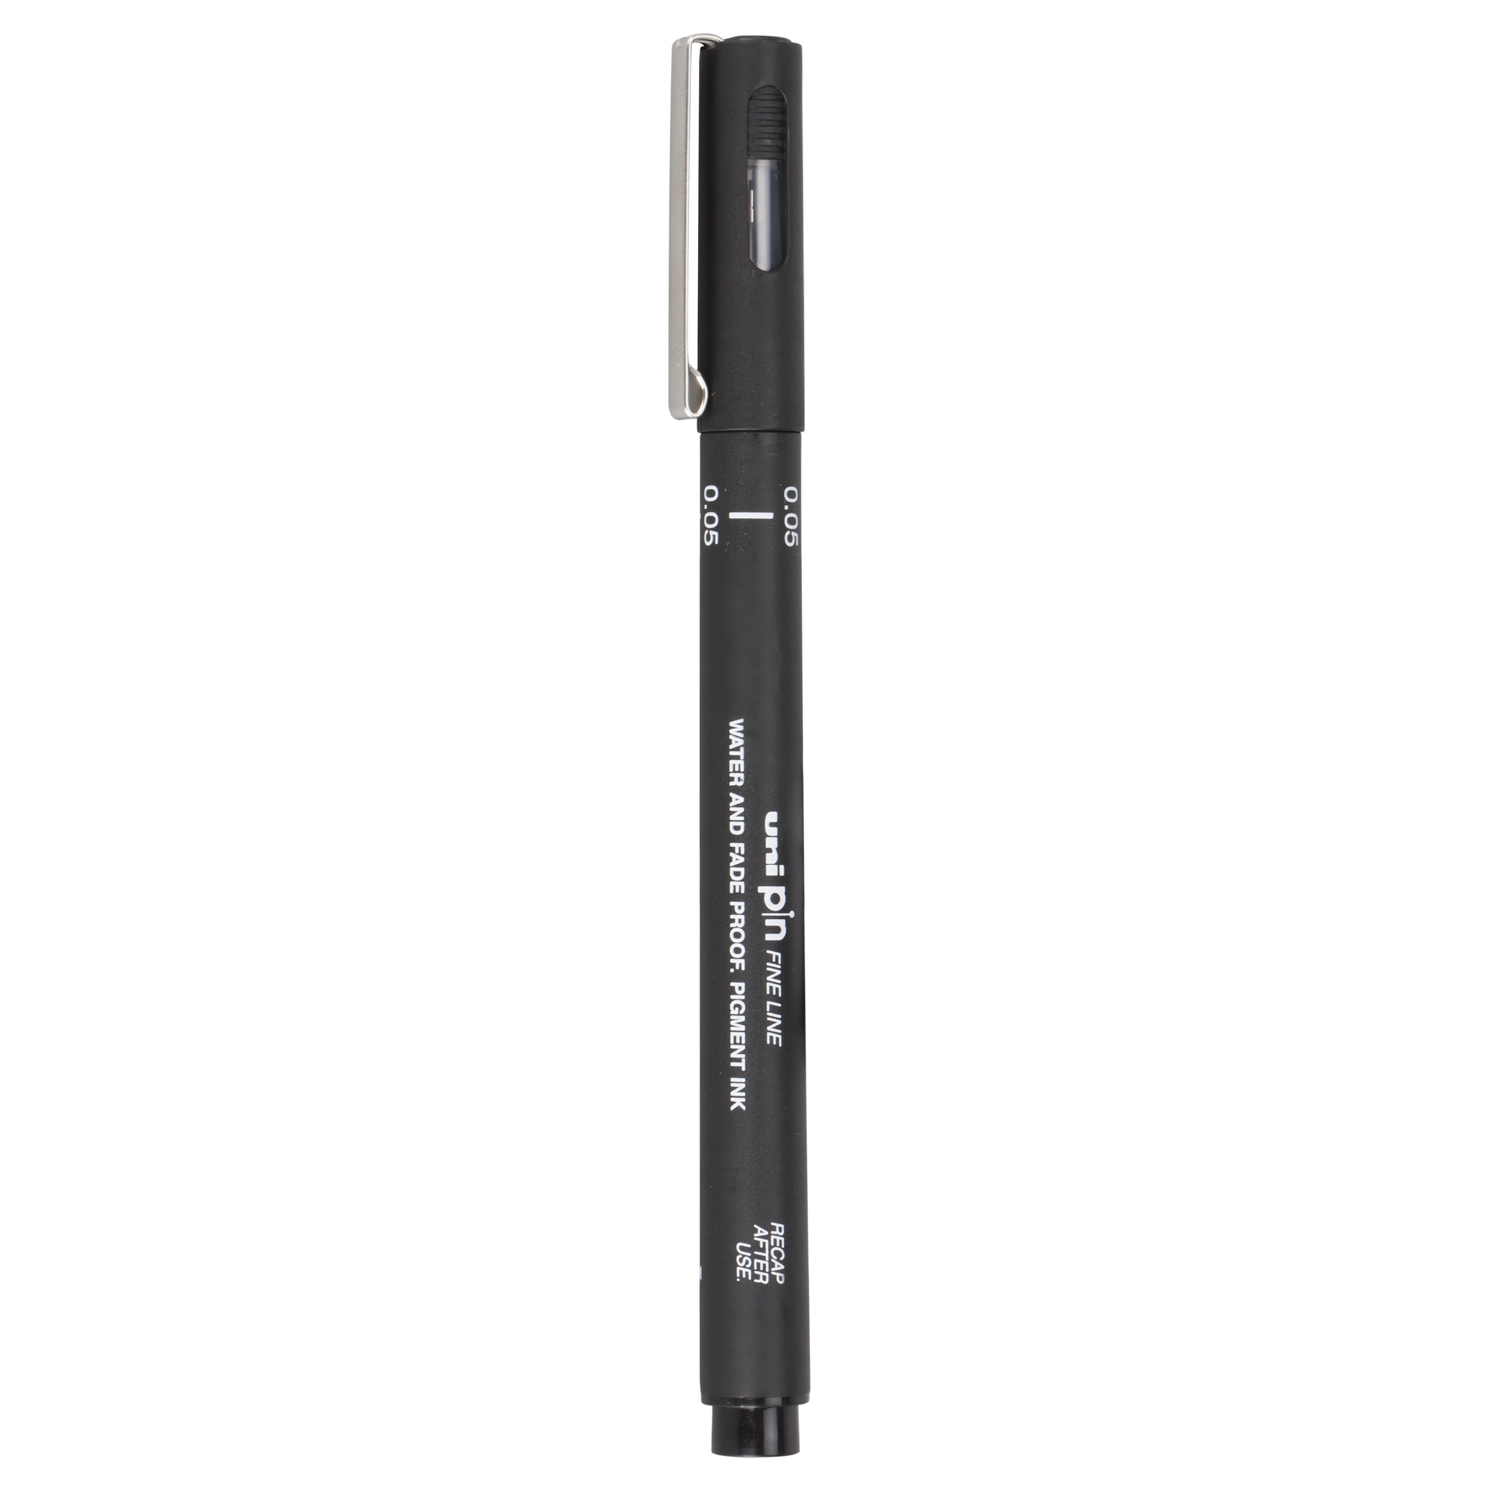 Uniball Pin Black Fine Liner Drawing Pen 0.5mm Image 1